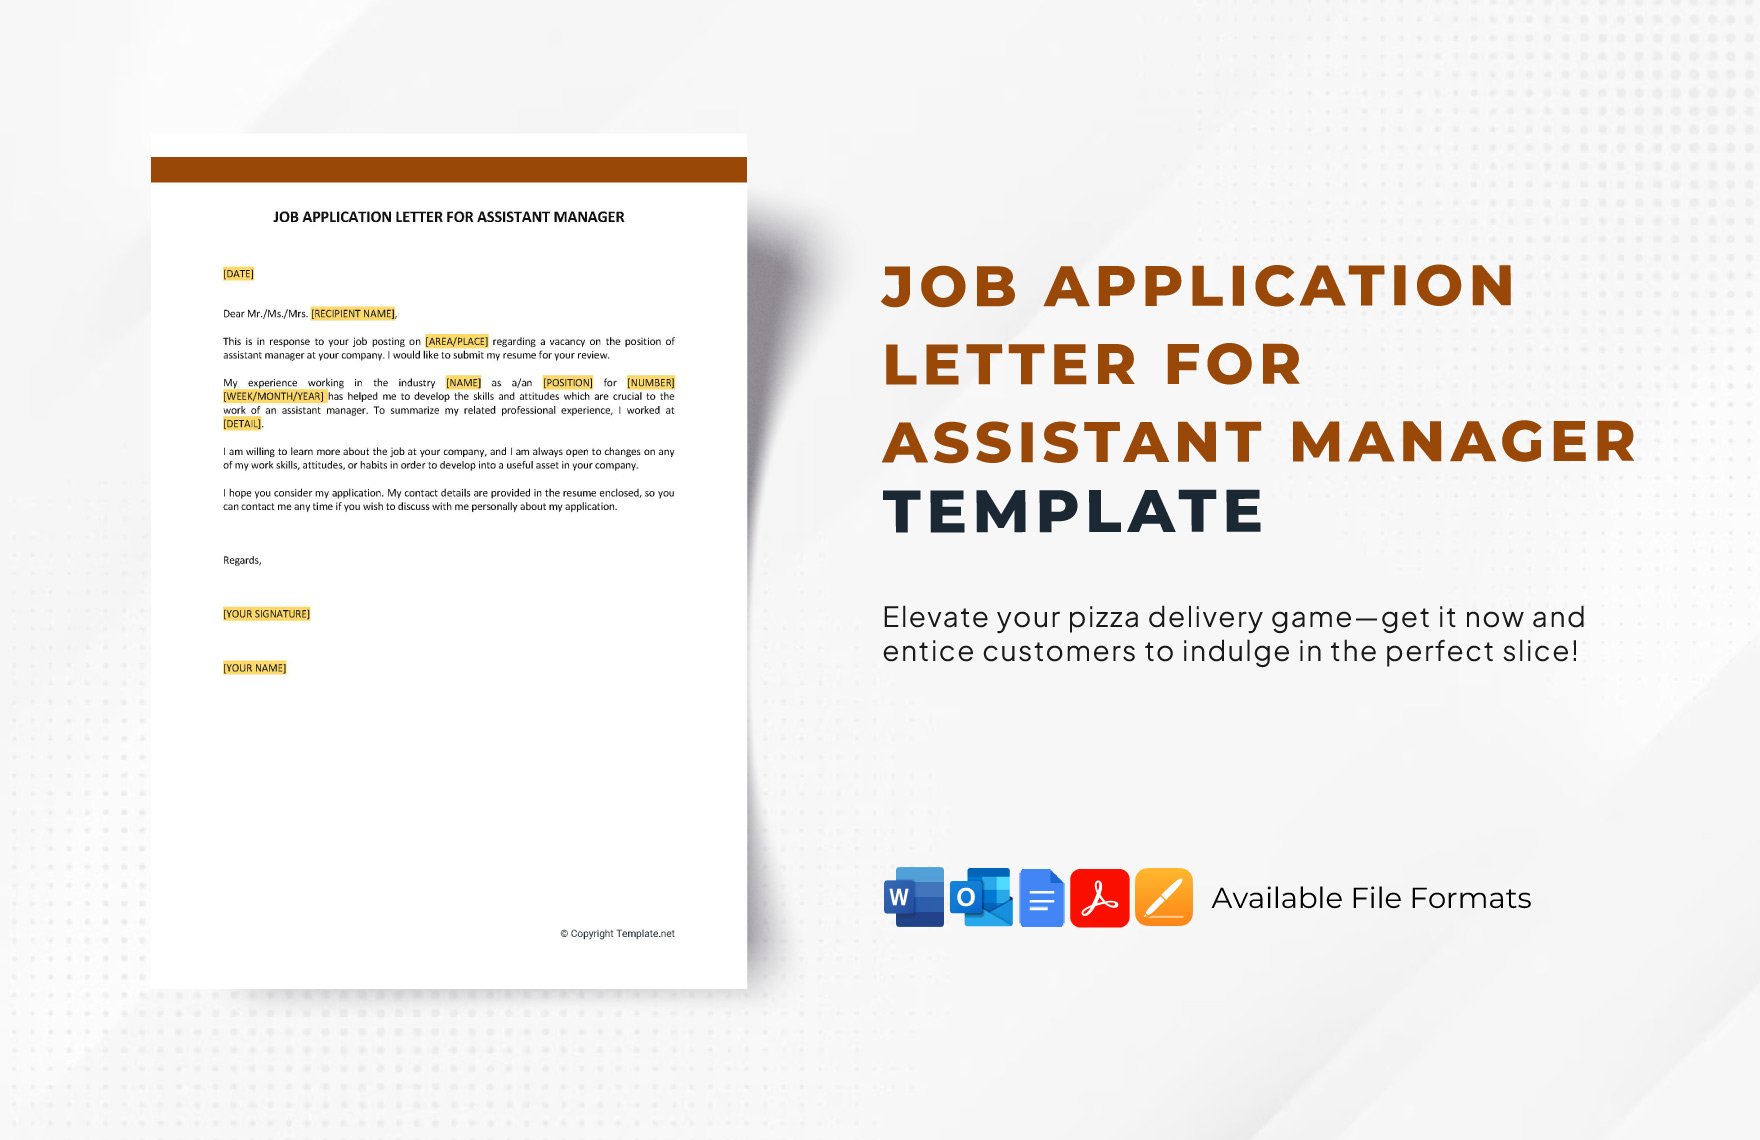 Job Application Letter for Assistant Manager